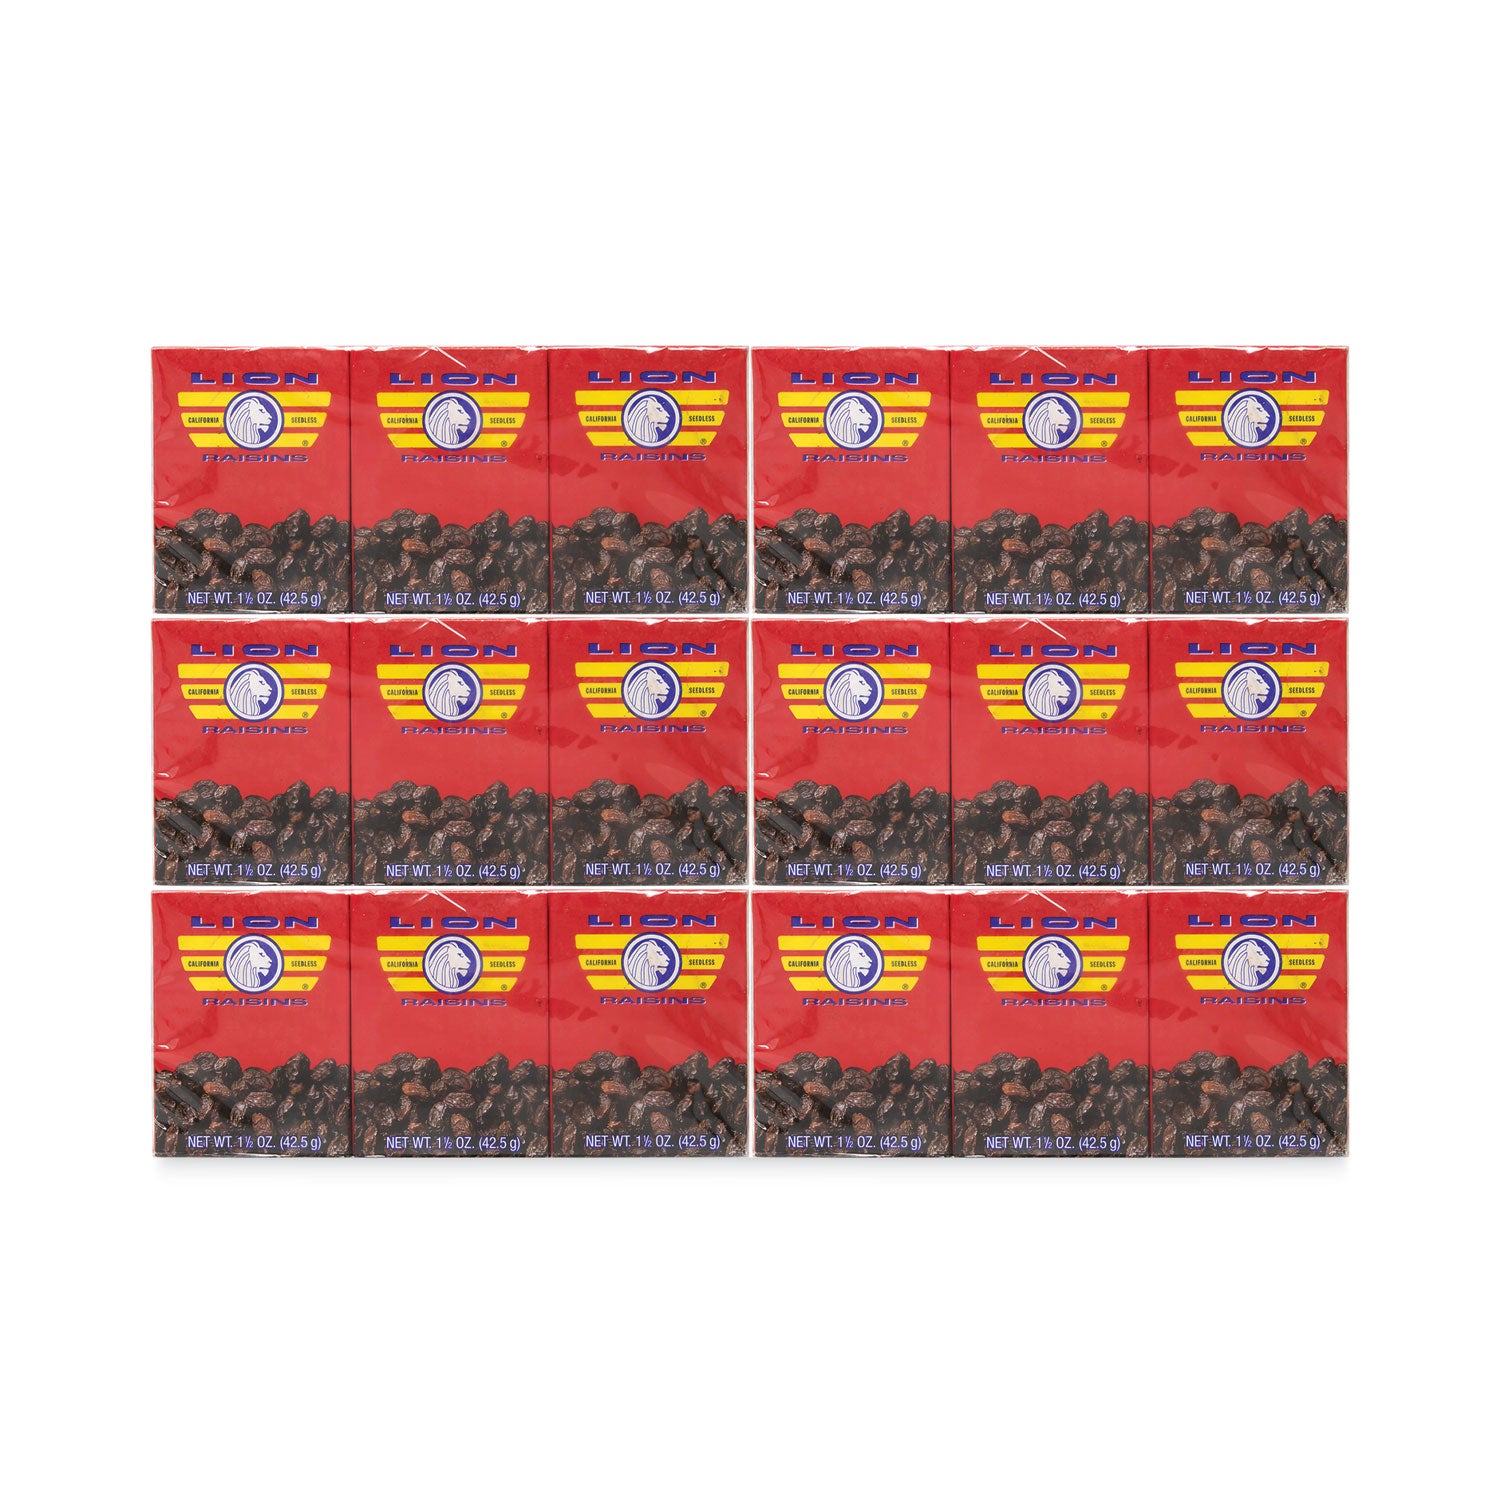 california-seedless-raisins-15-oz-box-6-pack-ships-in-1-3-business-days_grr30801001 - 4